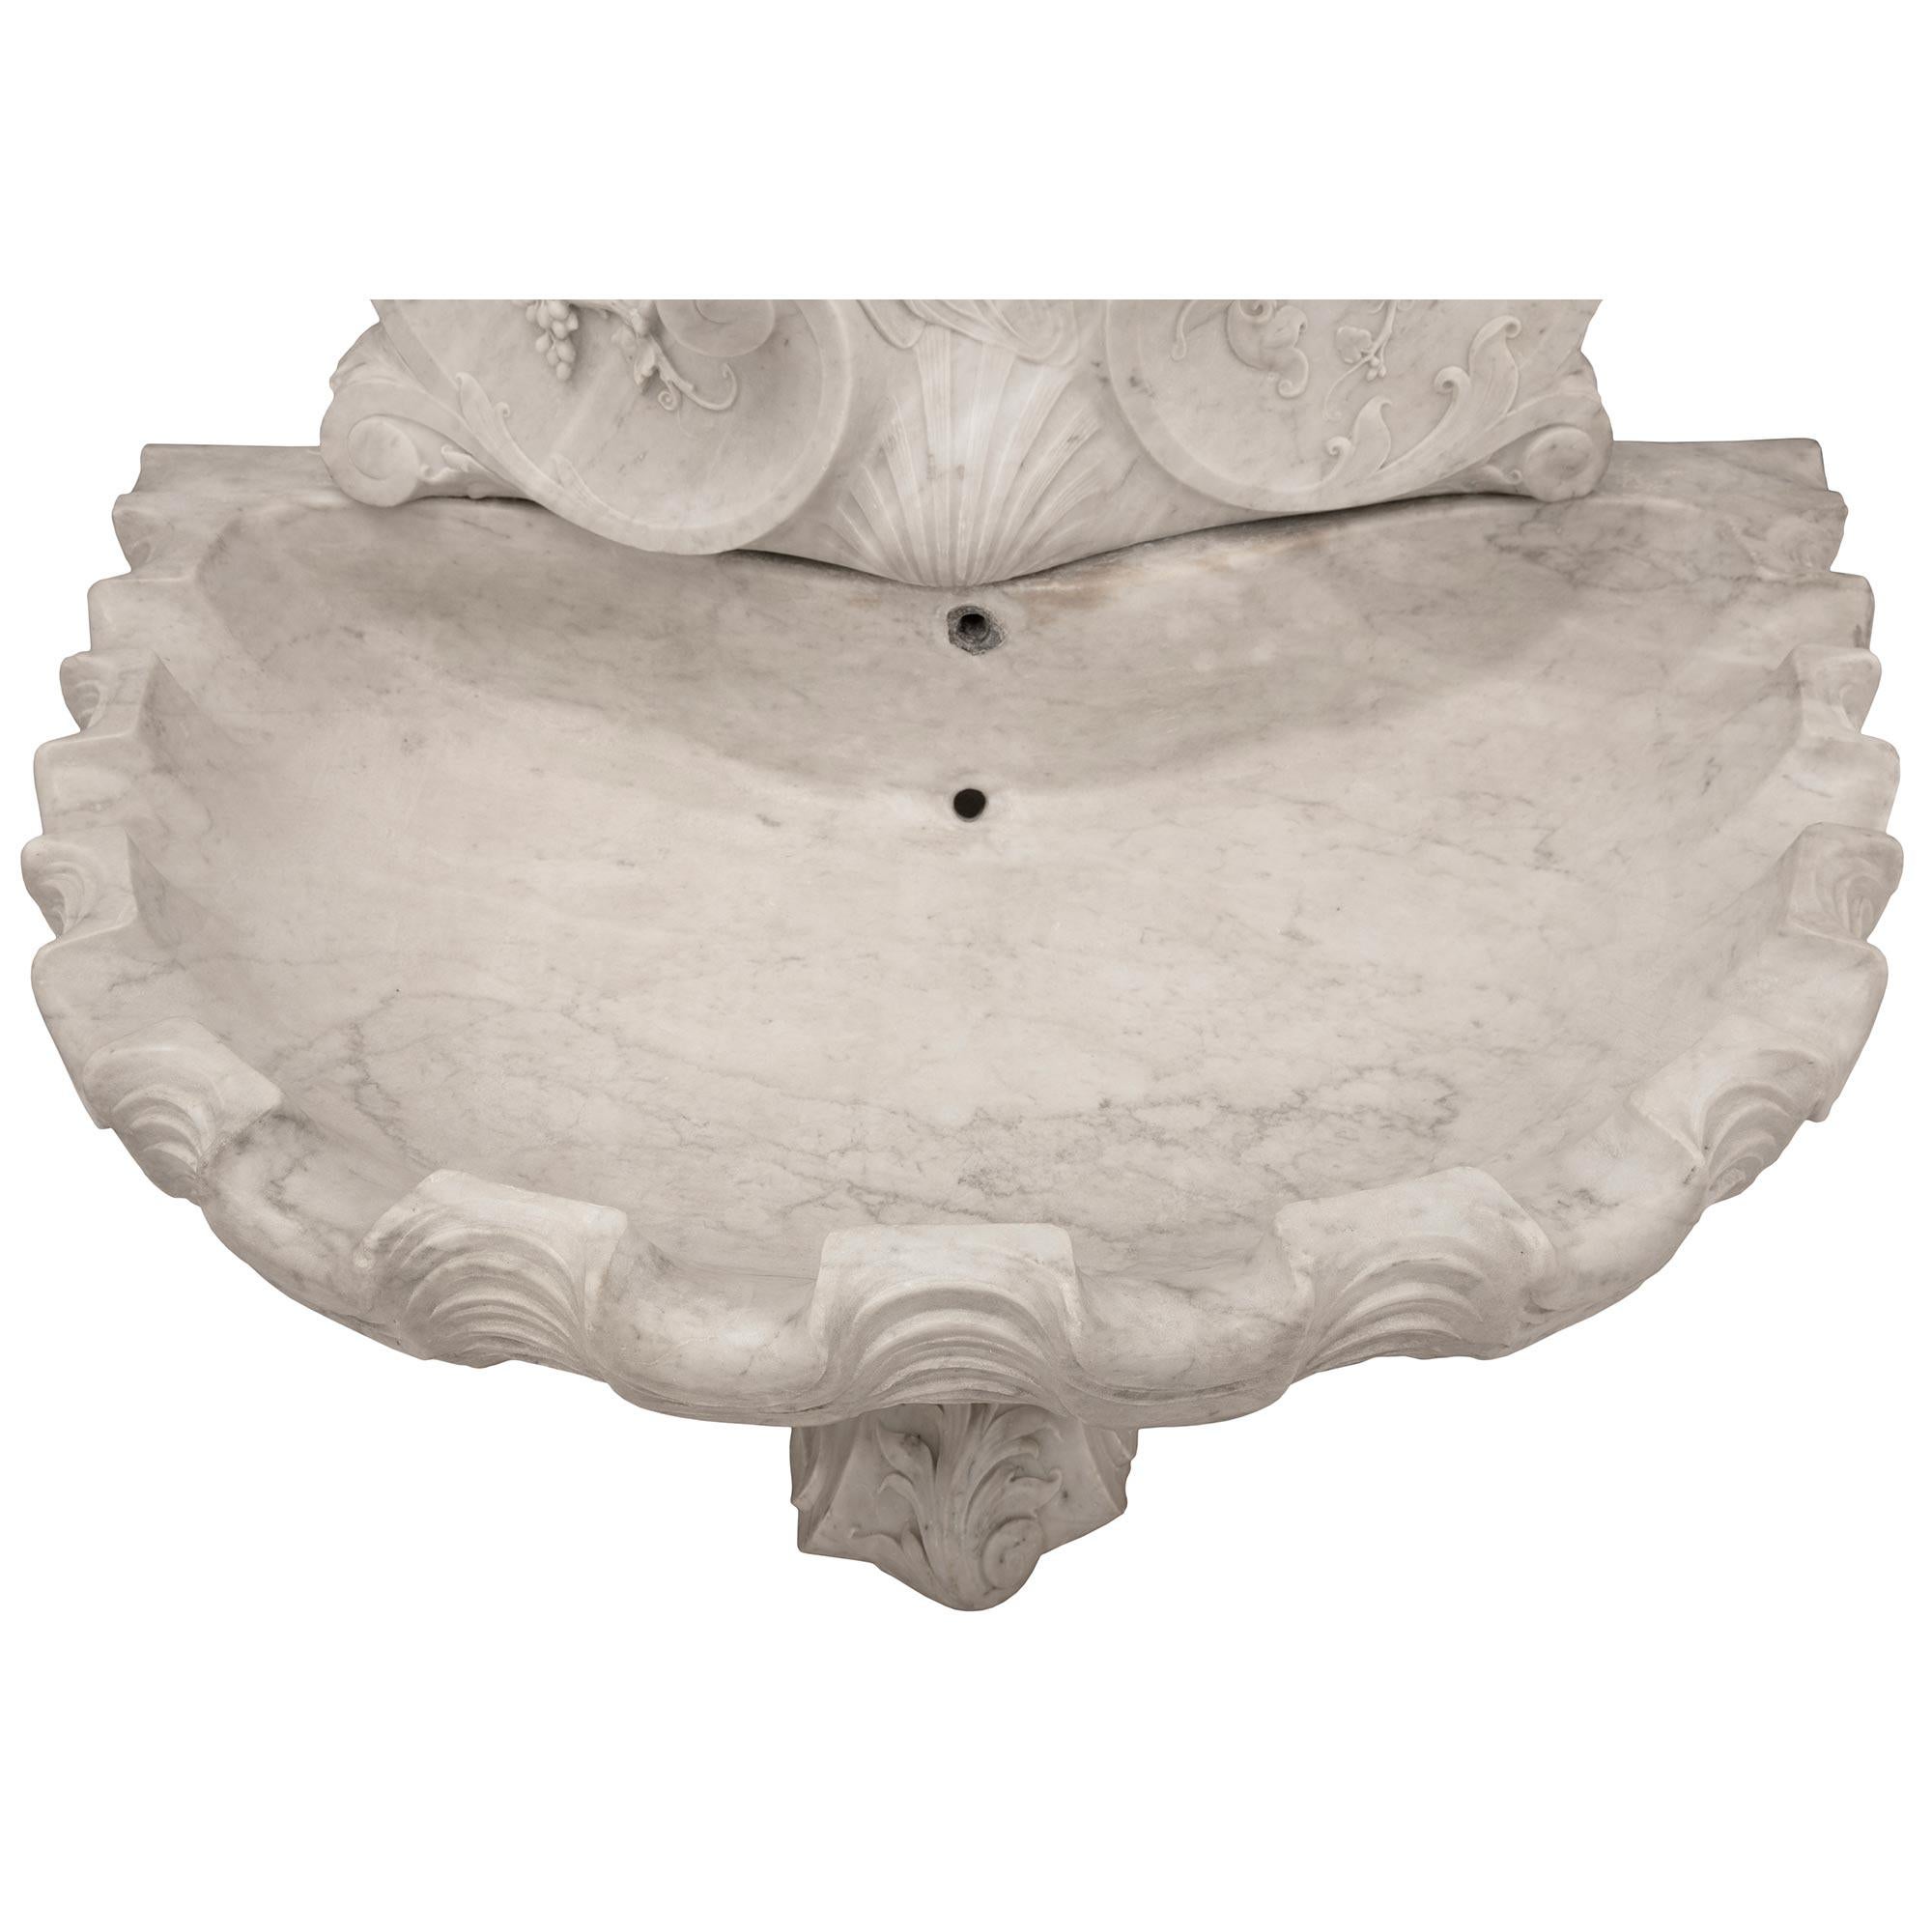 Italian 19th Century White Carrara Marble Fountain For Sale 10